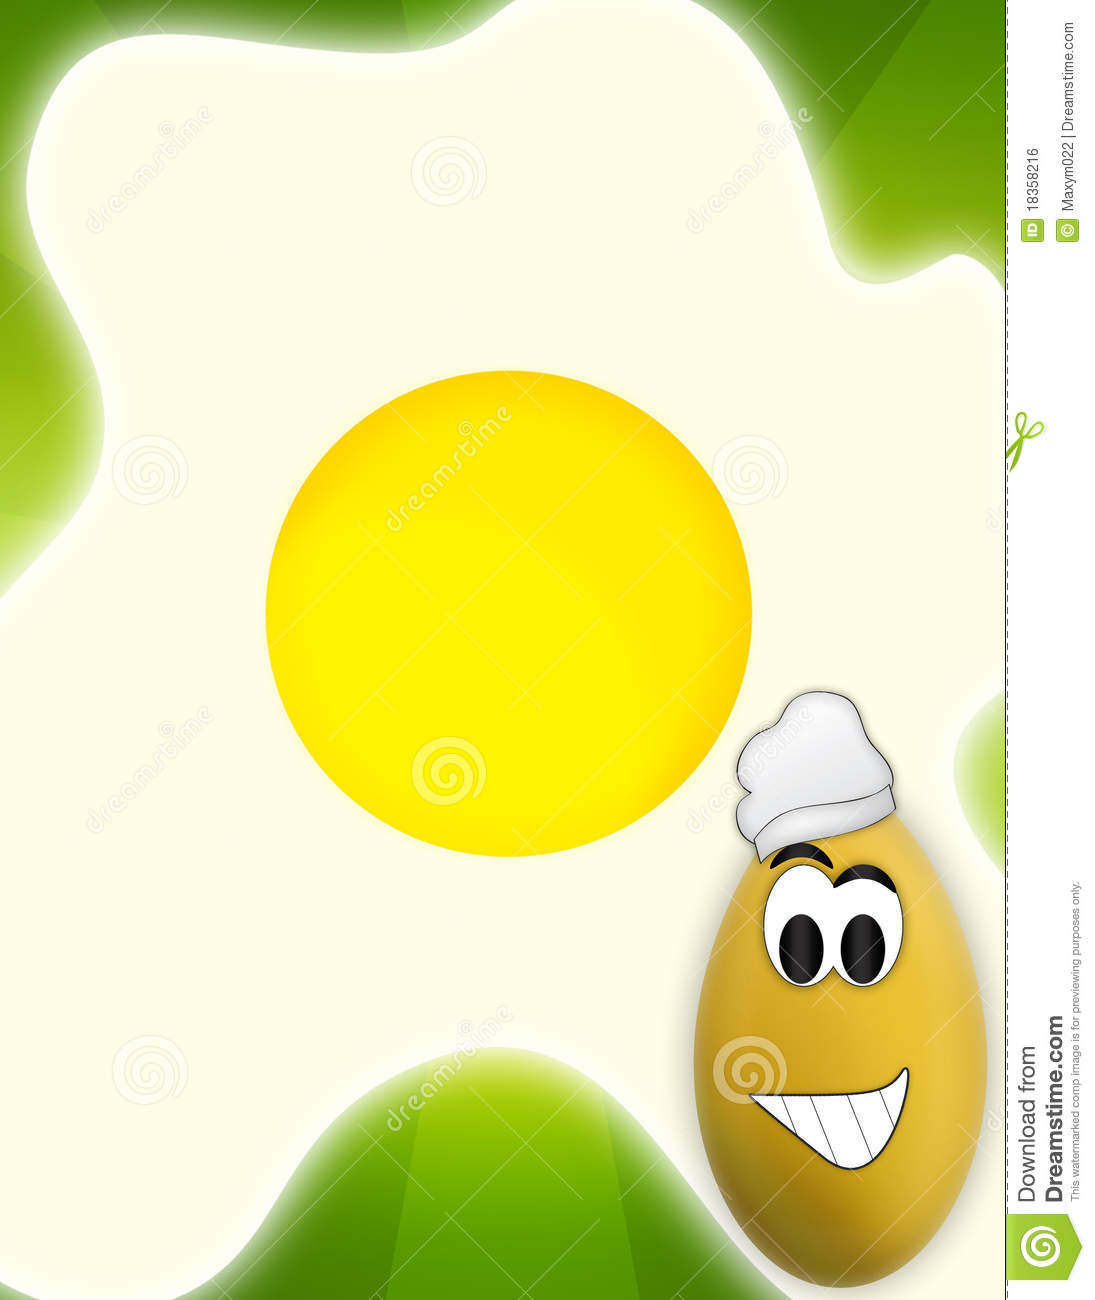 Funny Egg Royalty Free Stock Image   Image  18358216